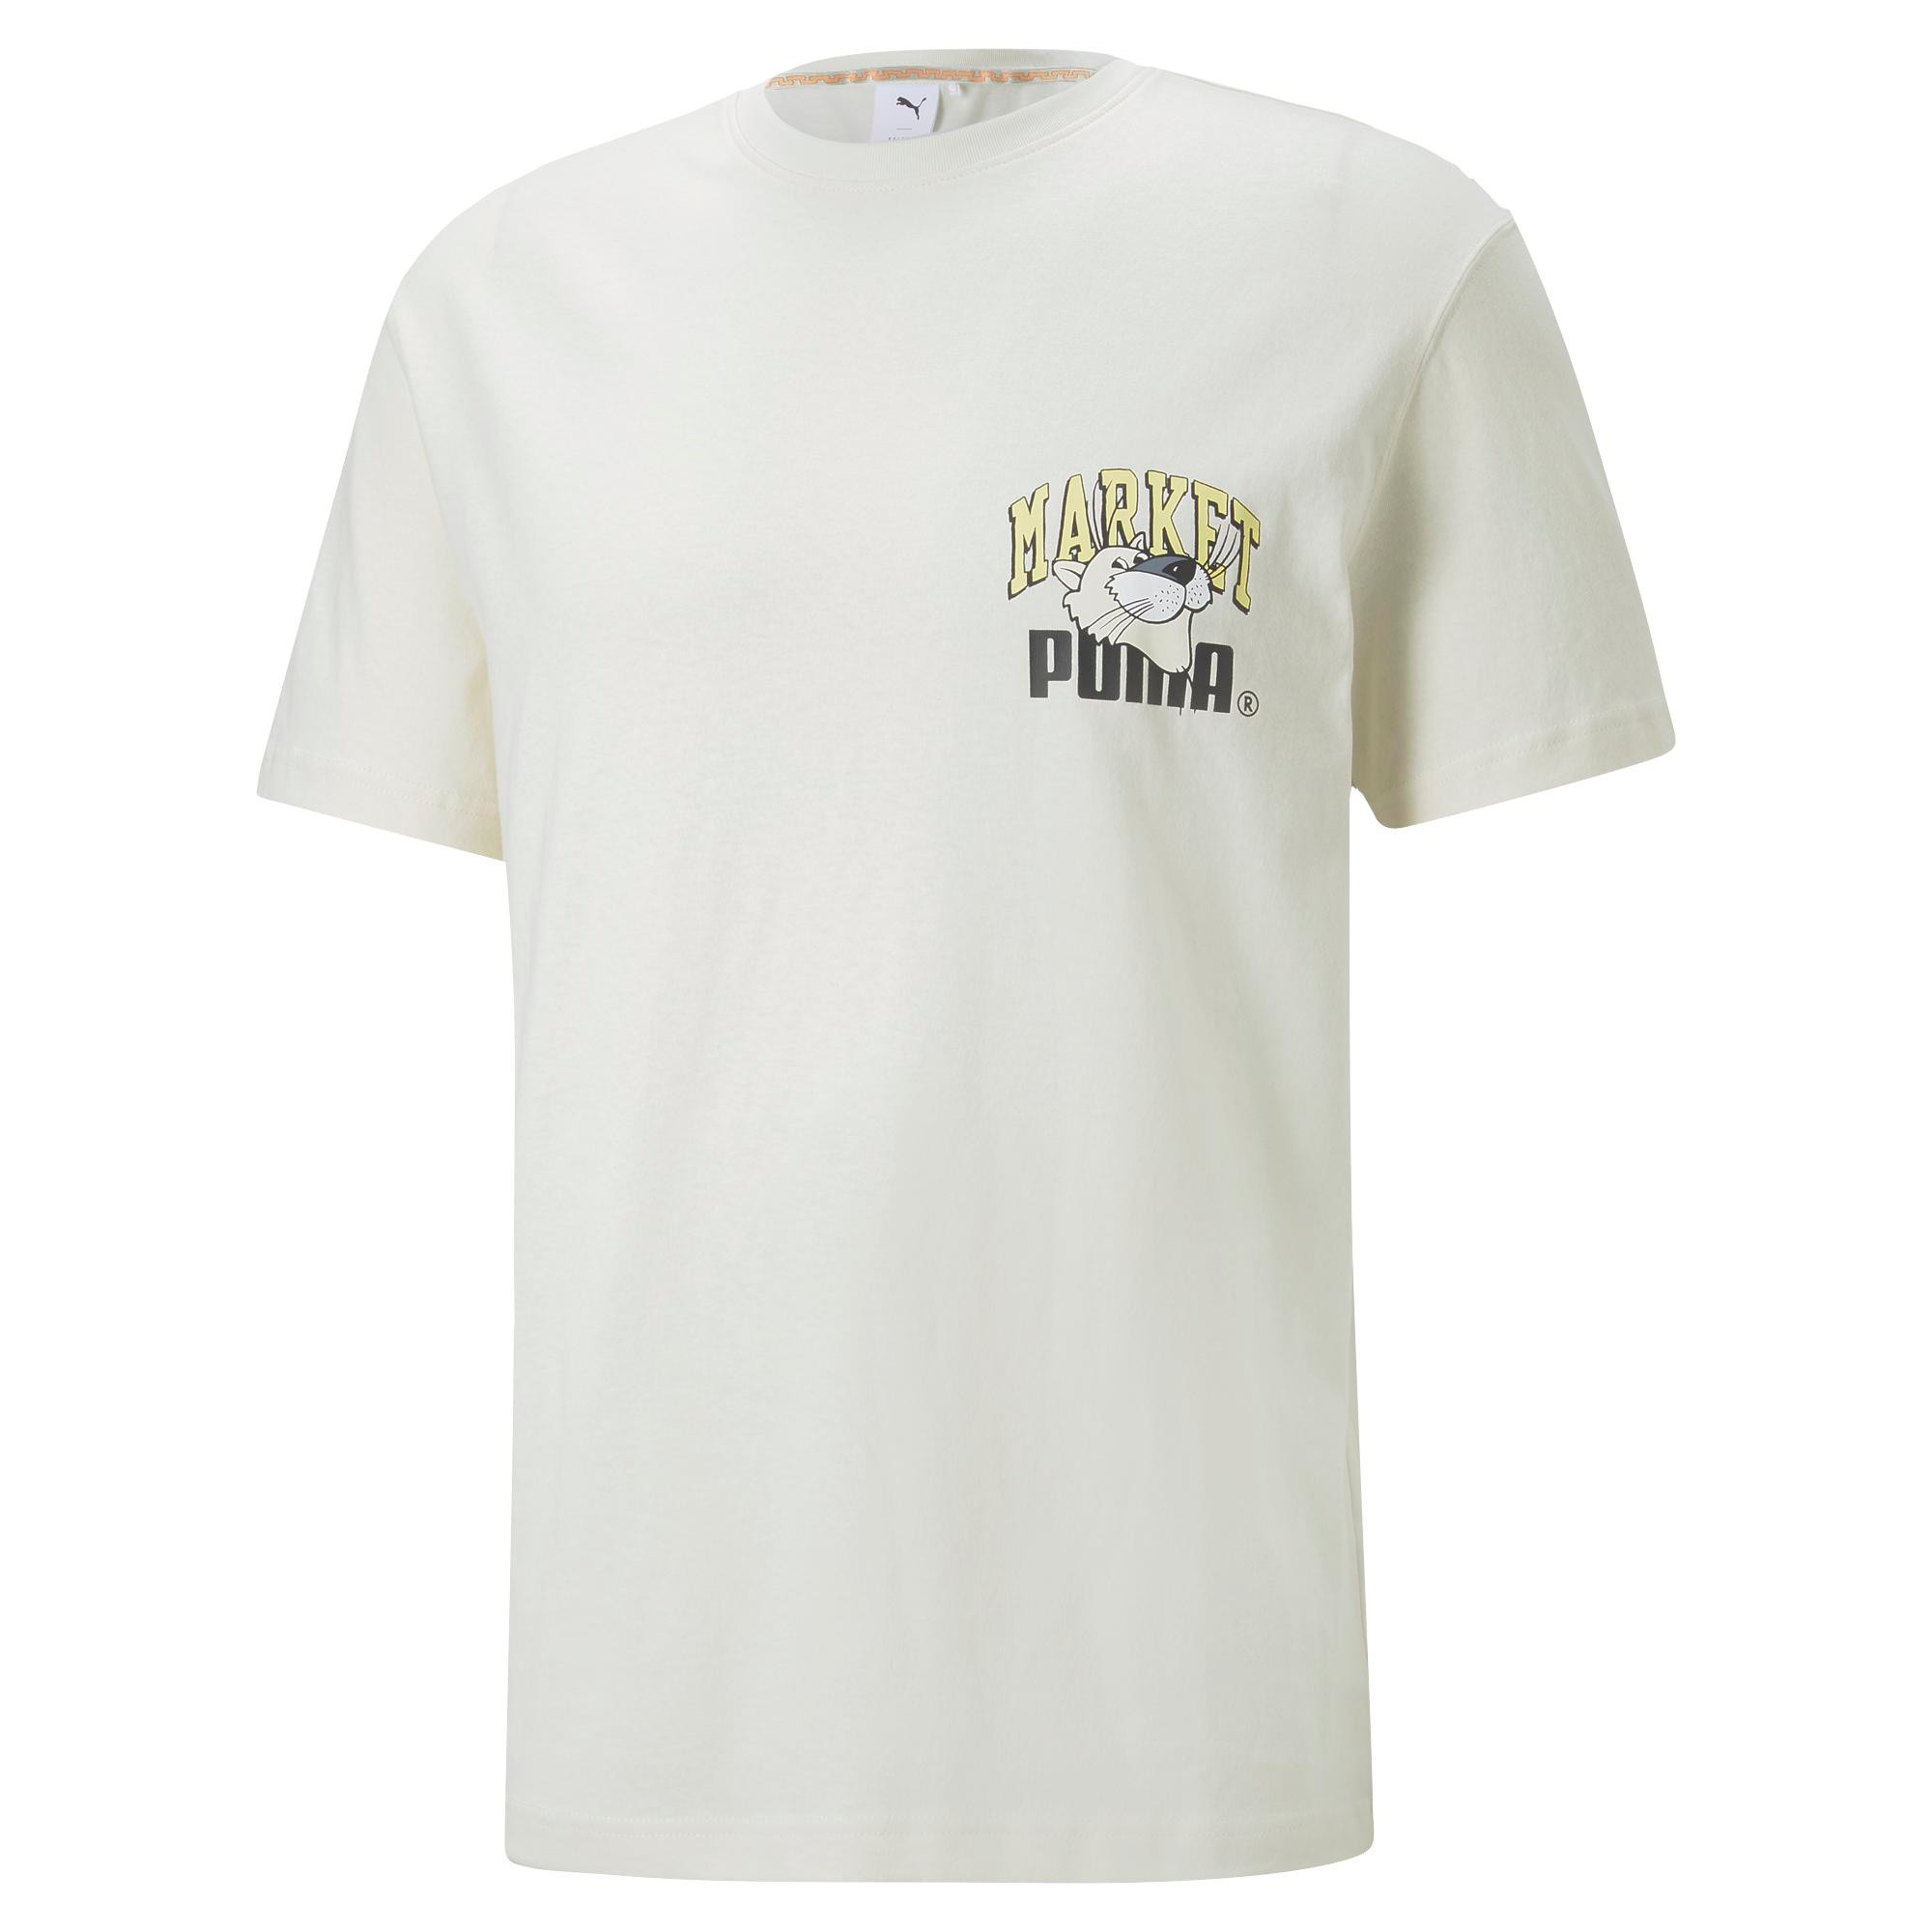 Puma x Market T-shirt, Light Beige, large image number 0